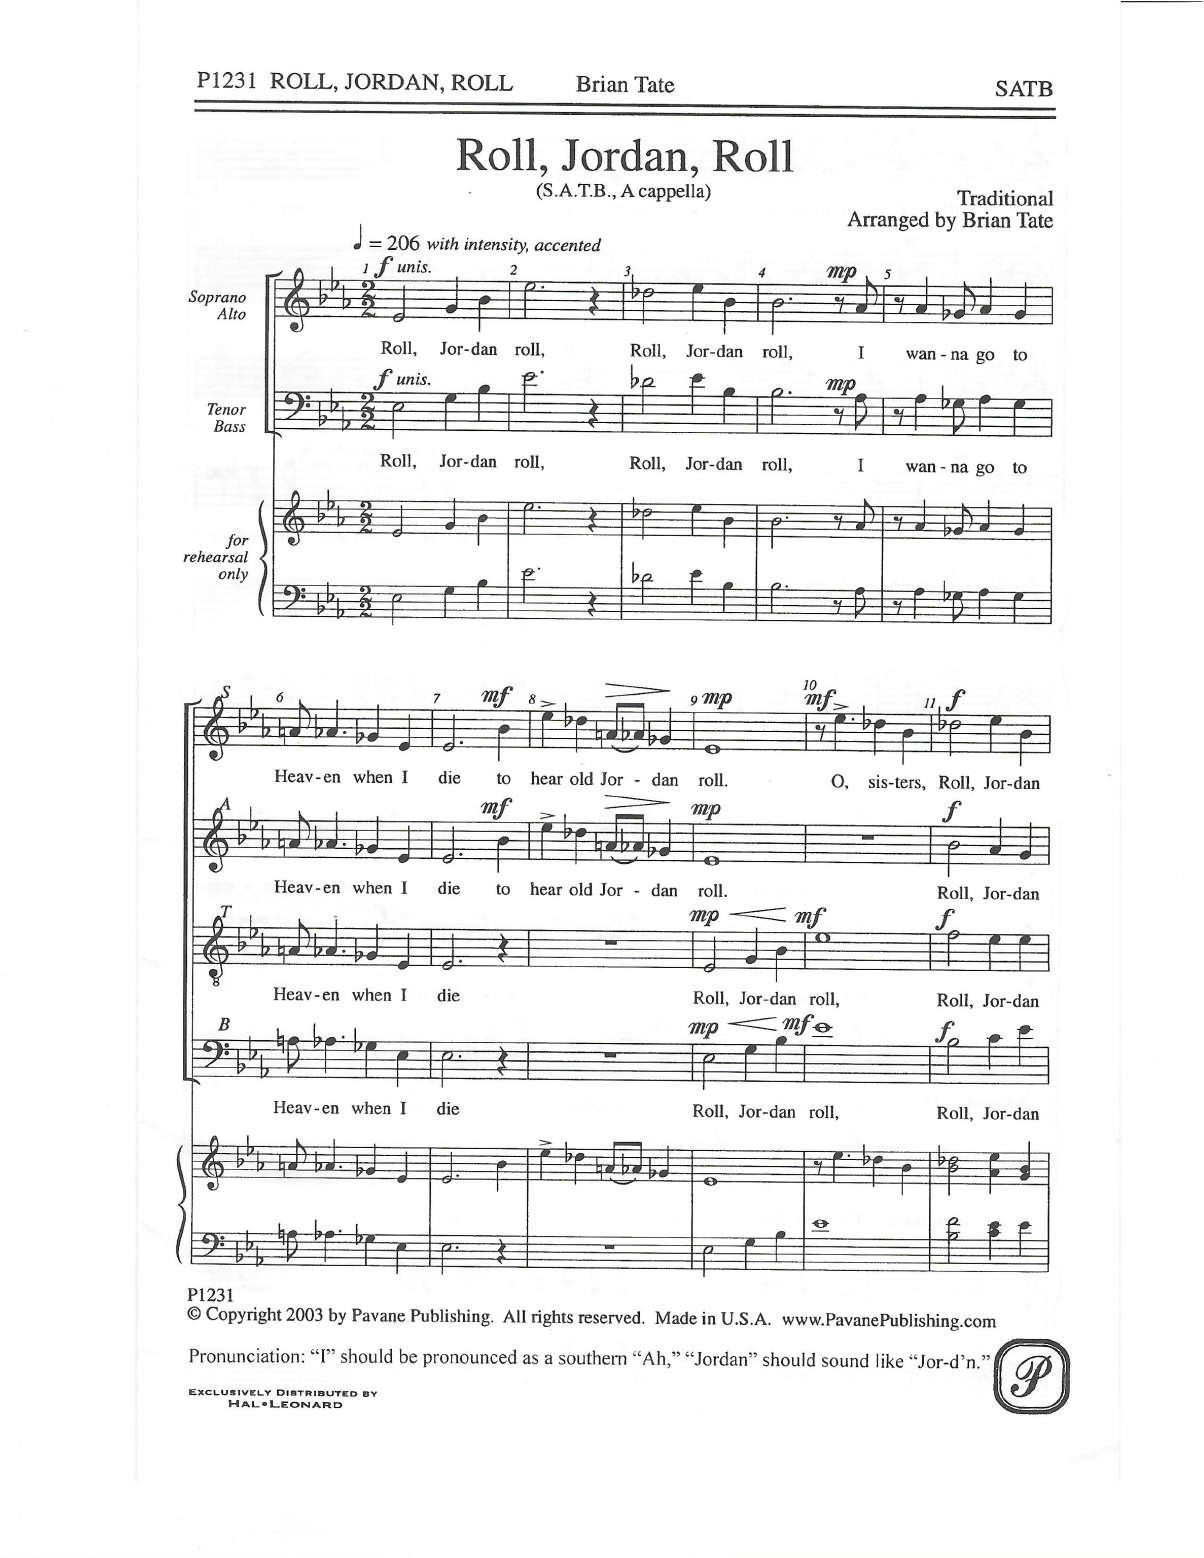 Traditional Roll, Jordan, Roll (arr. Brian Tate) Sheet Music Notes & Chords for SATB Choir - Download or Print PDF